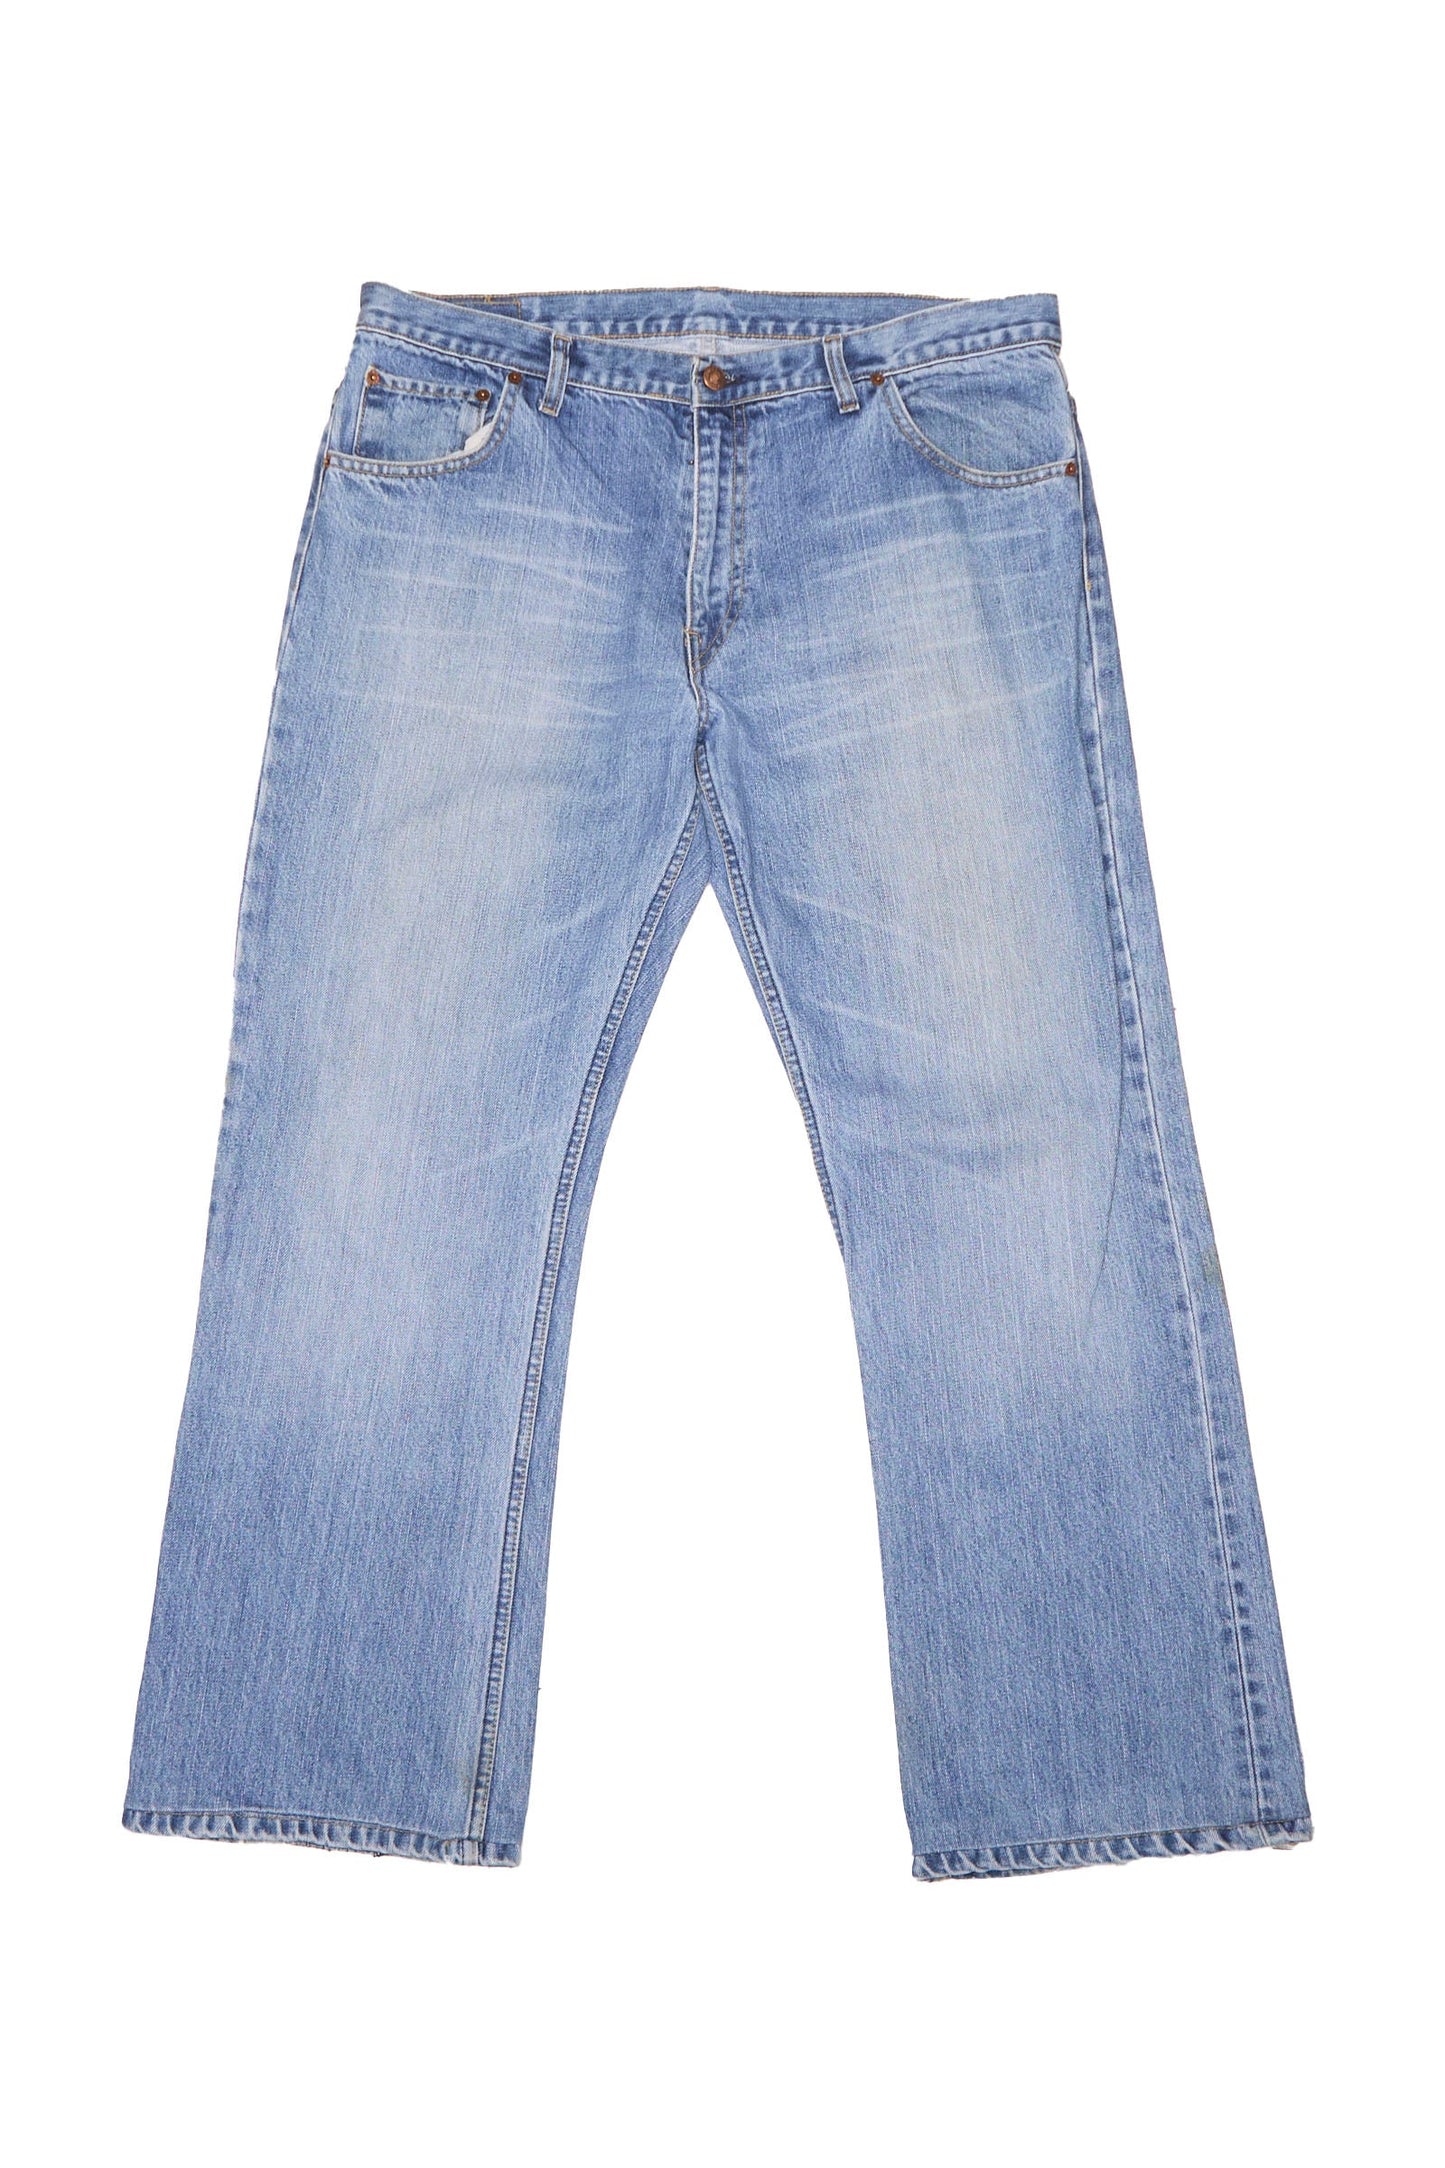 Zip Levis Straight Cut Jeans - W36" L32"